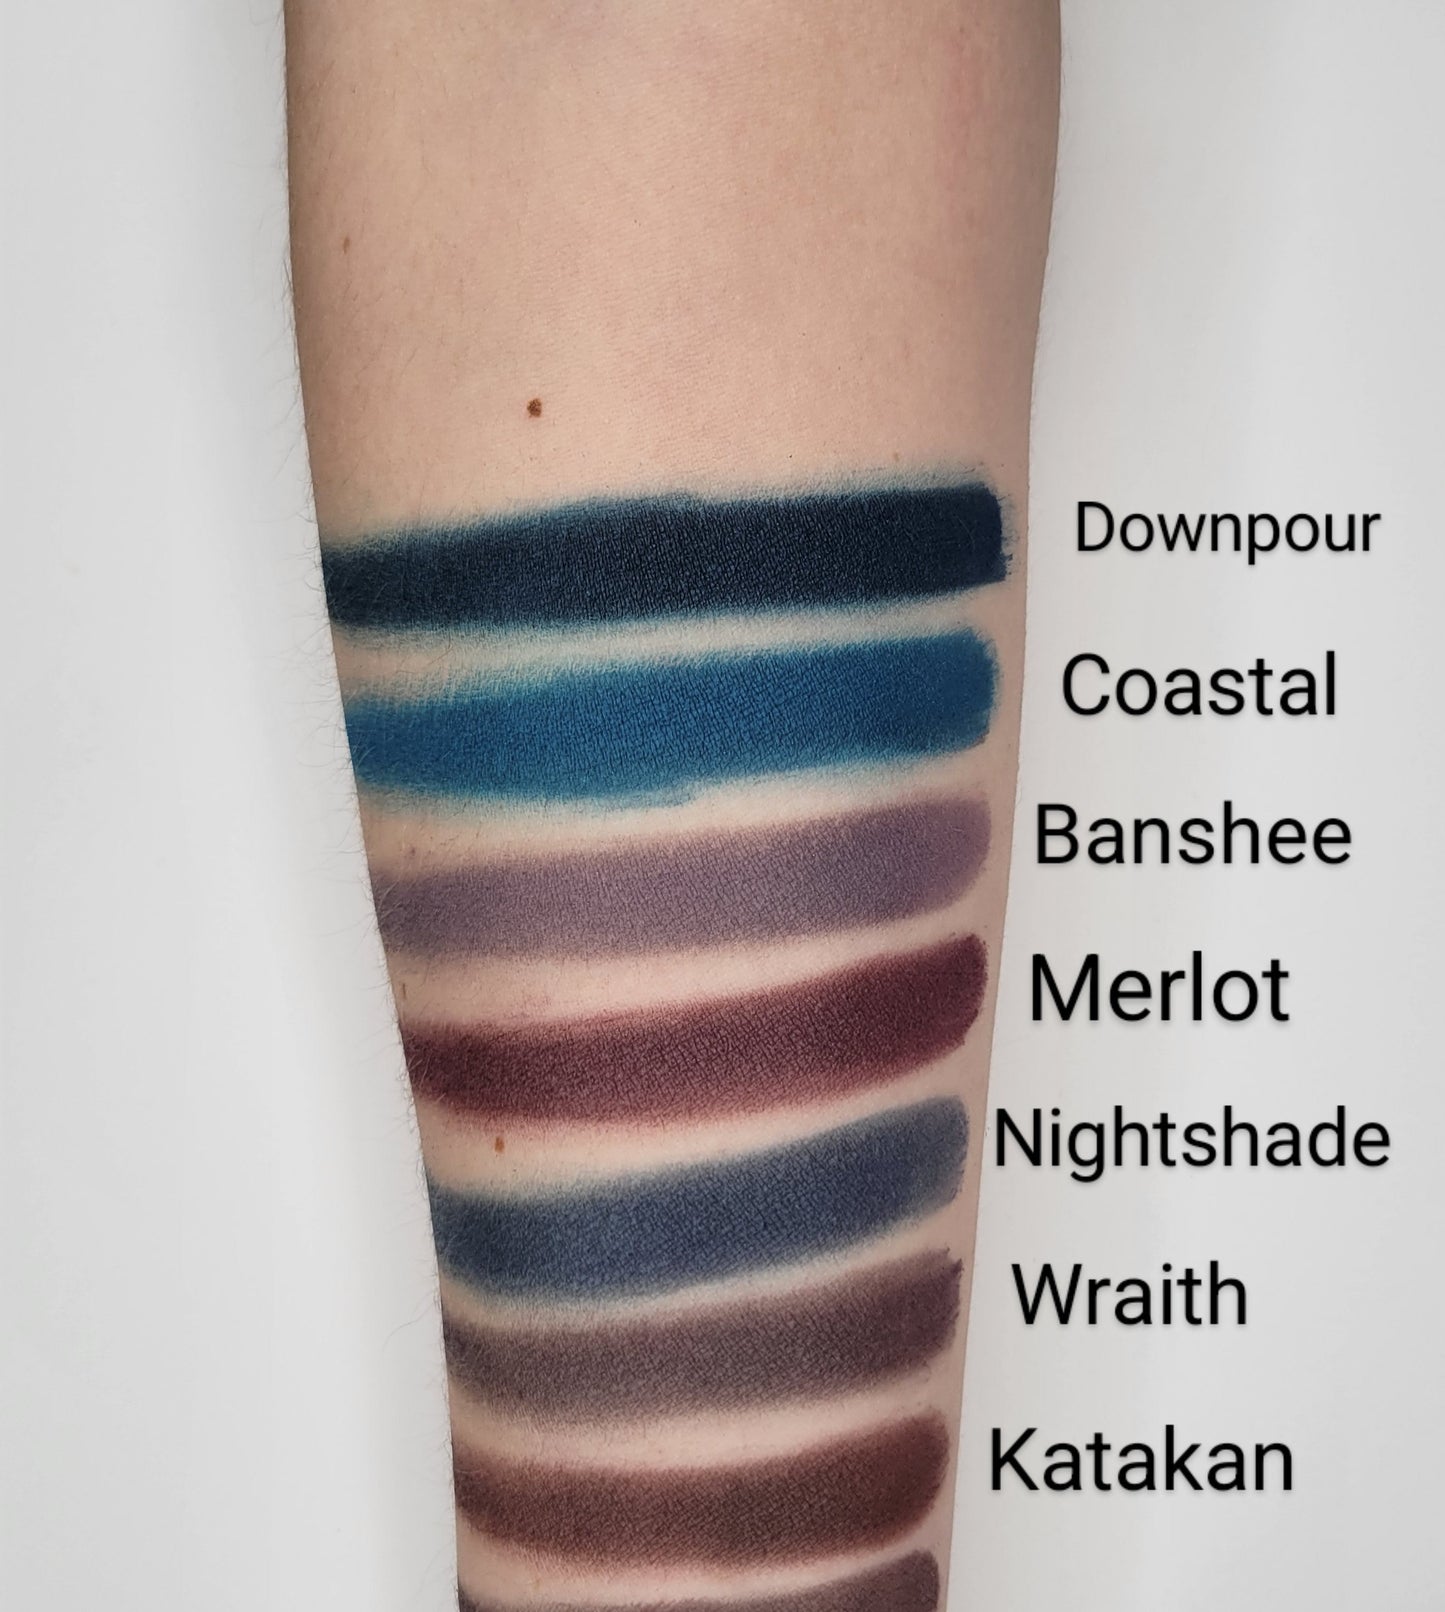 Downpour - Eyeshadow Matte Navy Blue